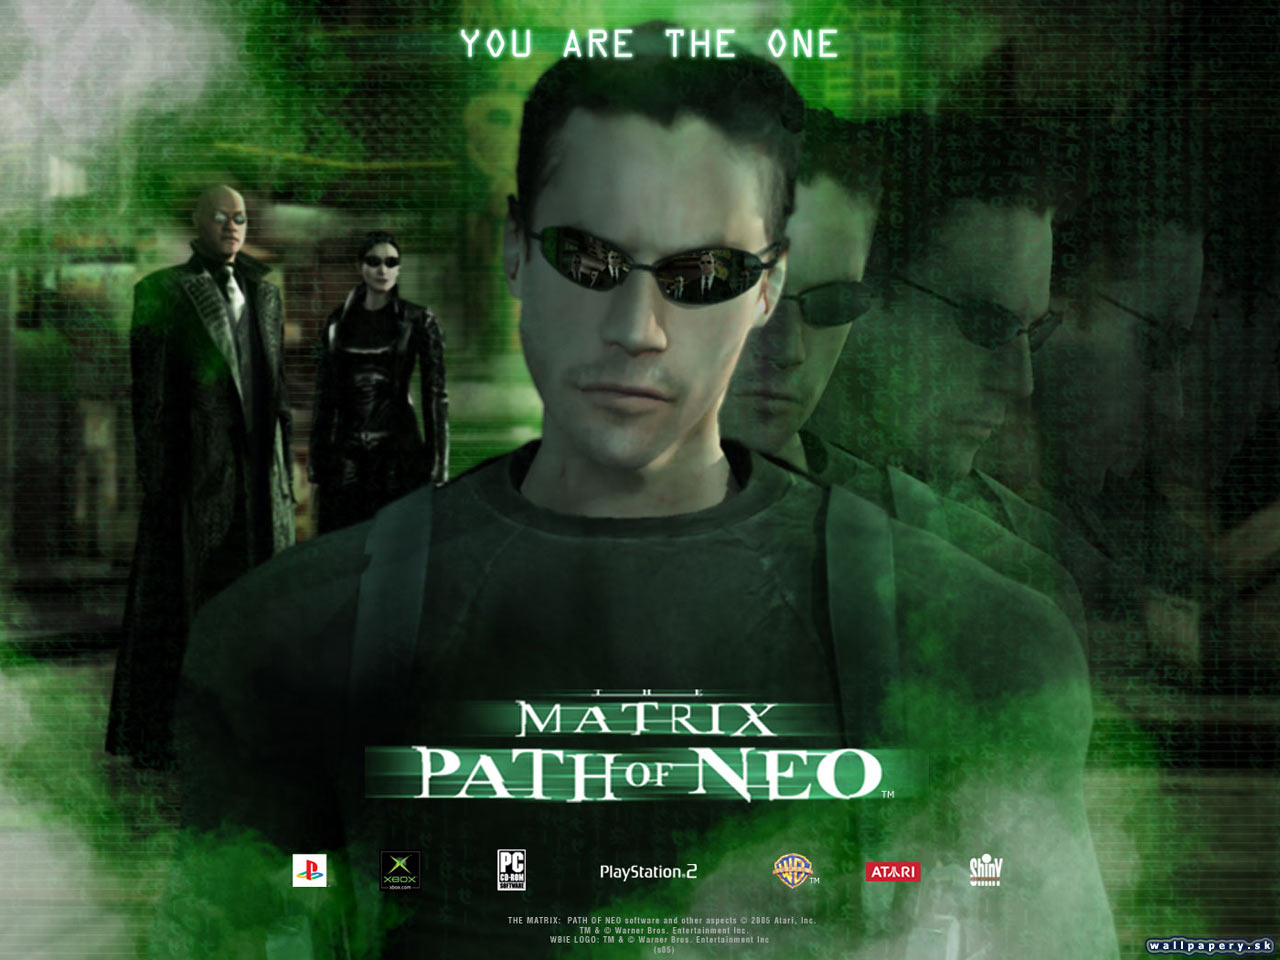 The Matrix: Path of Neo - wallpaper 4